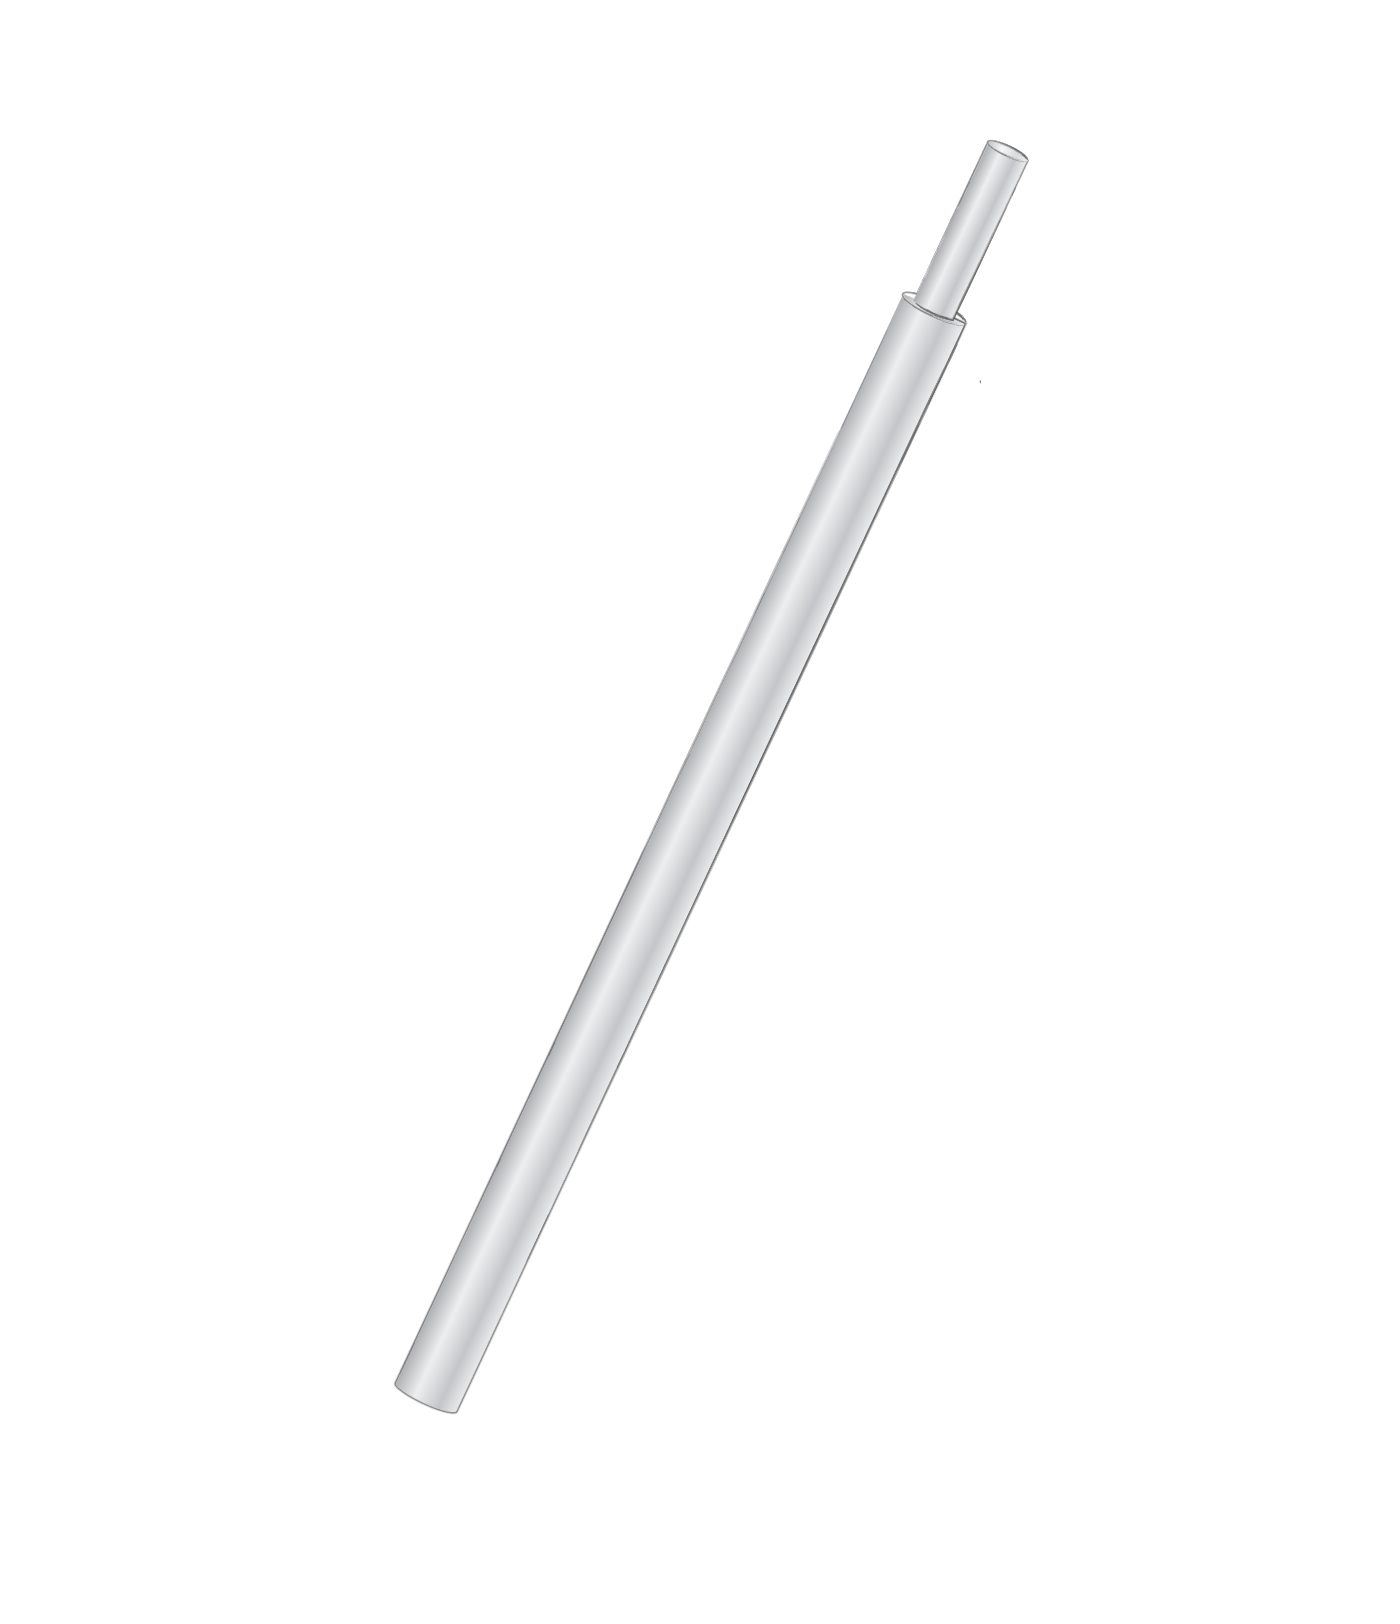  ALU-Steckstange 1.3 m (ø35 mm) 